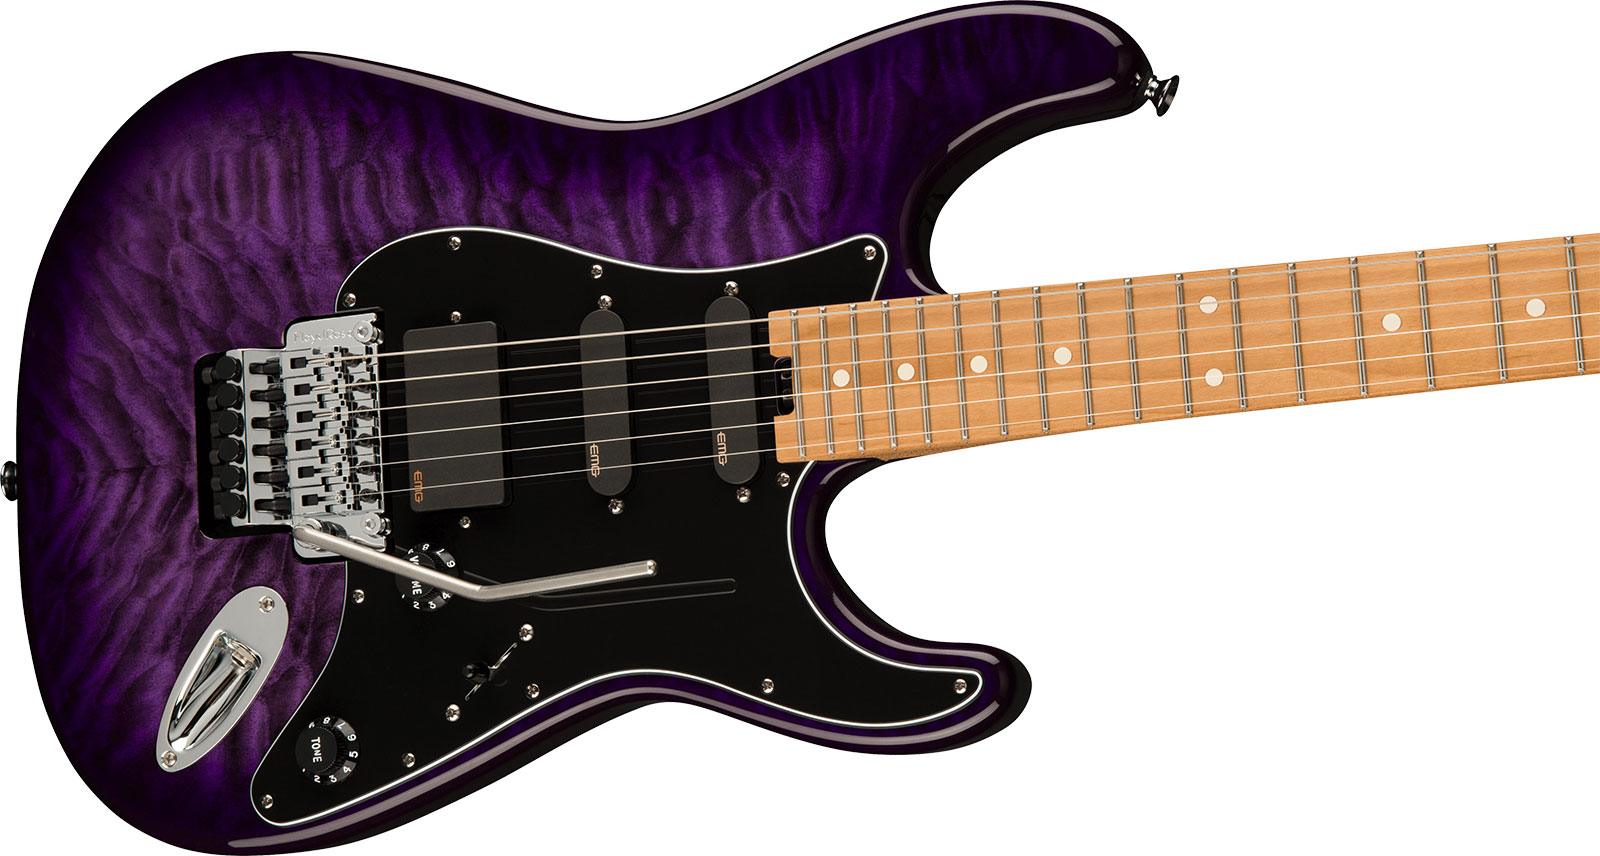 Charvel Marco Sfogli So Cal Style 1 Pro Mod Signature Hss Emg Fr Mn - Transparent Purple Burst - Signature electric guitar - Variation 2